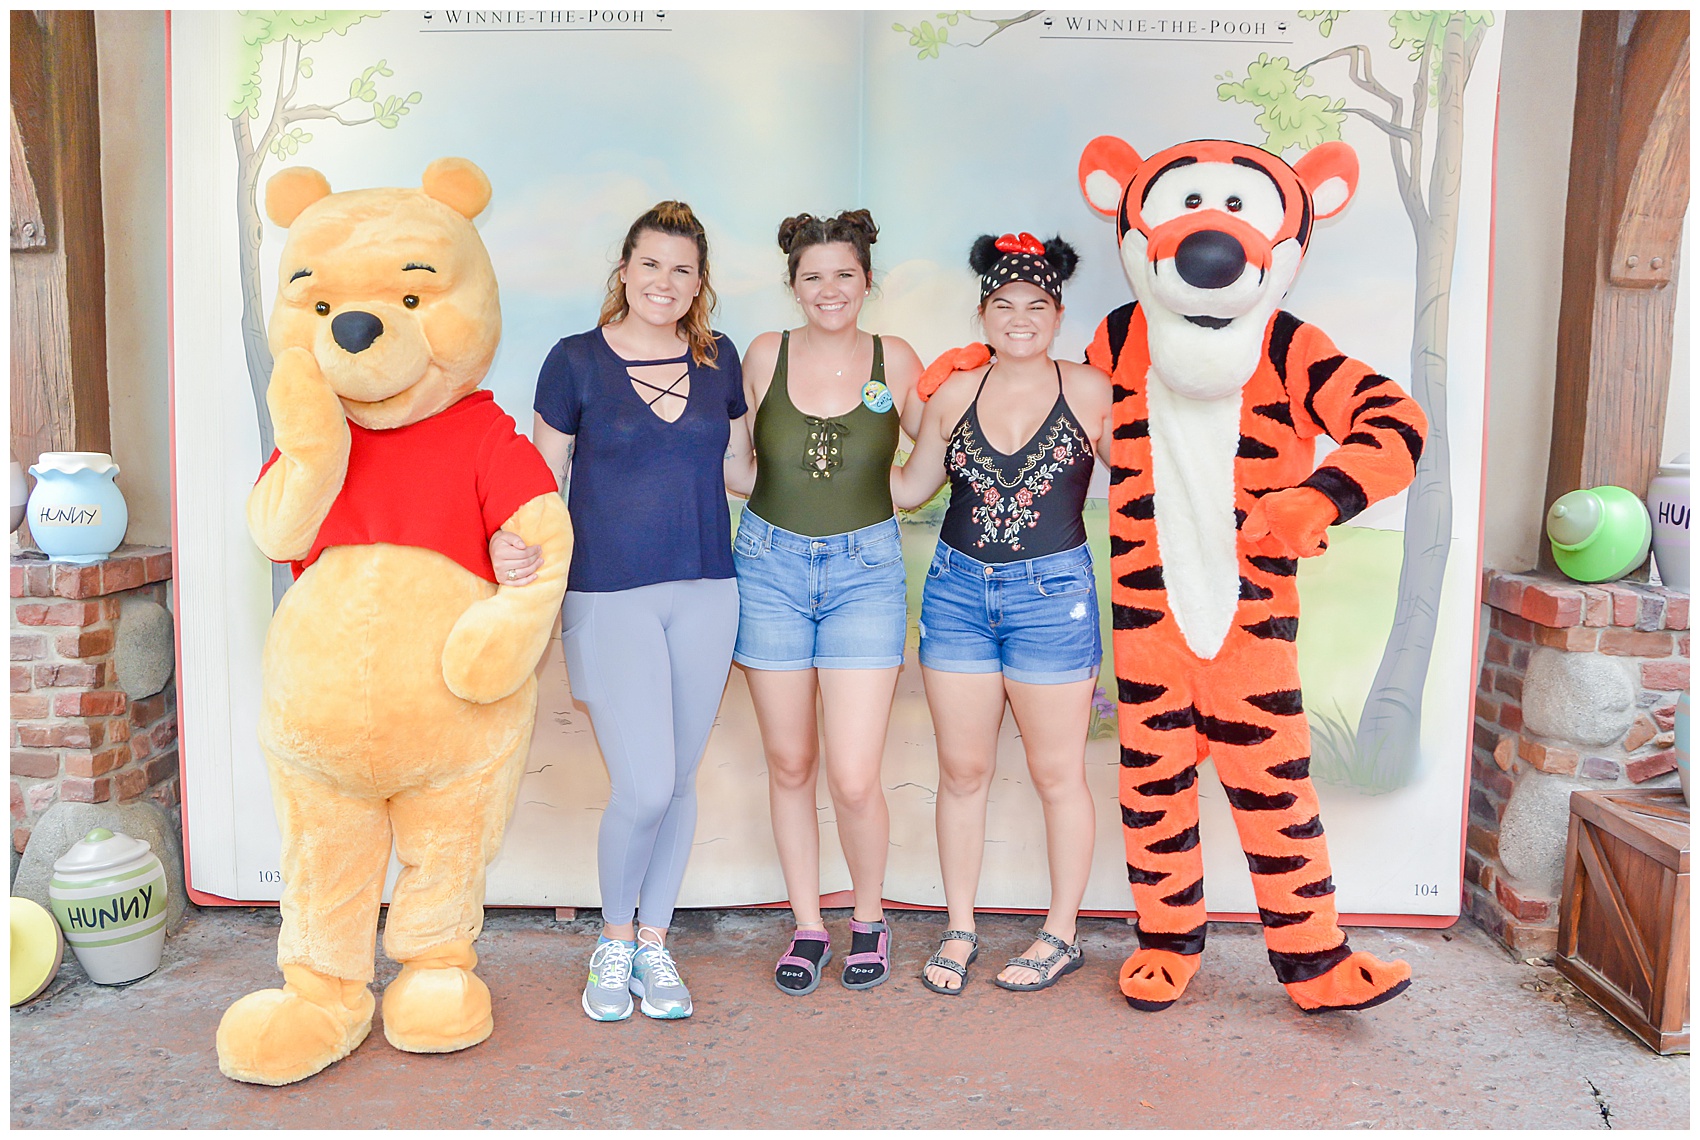 Disney's Winnie the Pooh